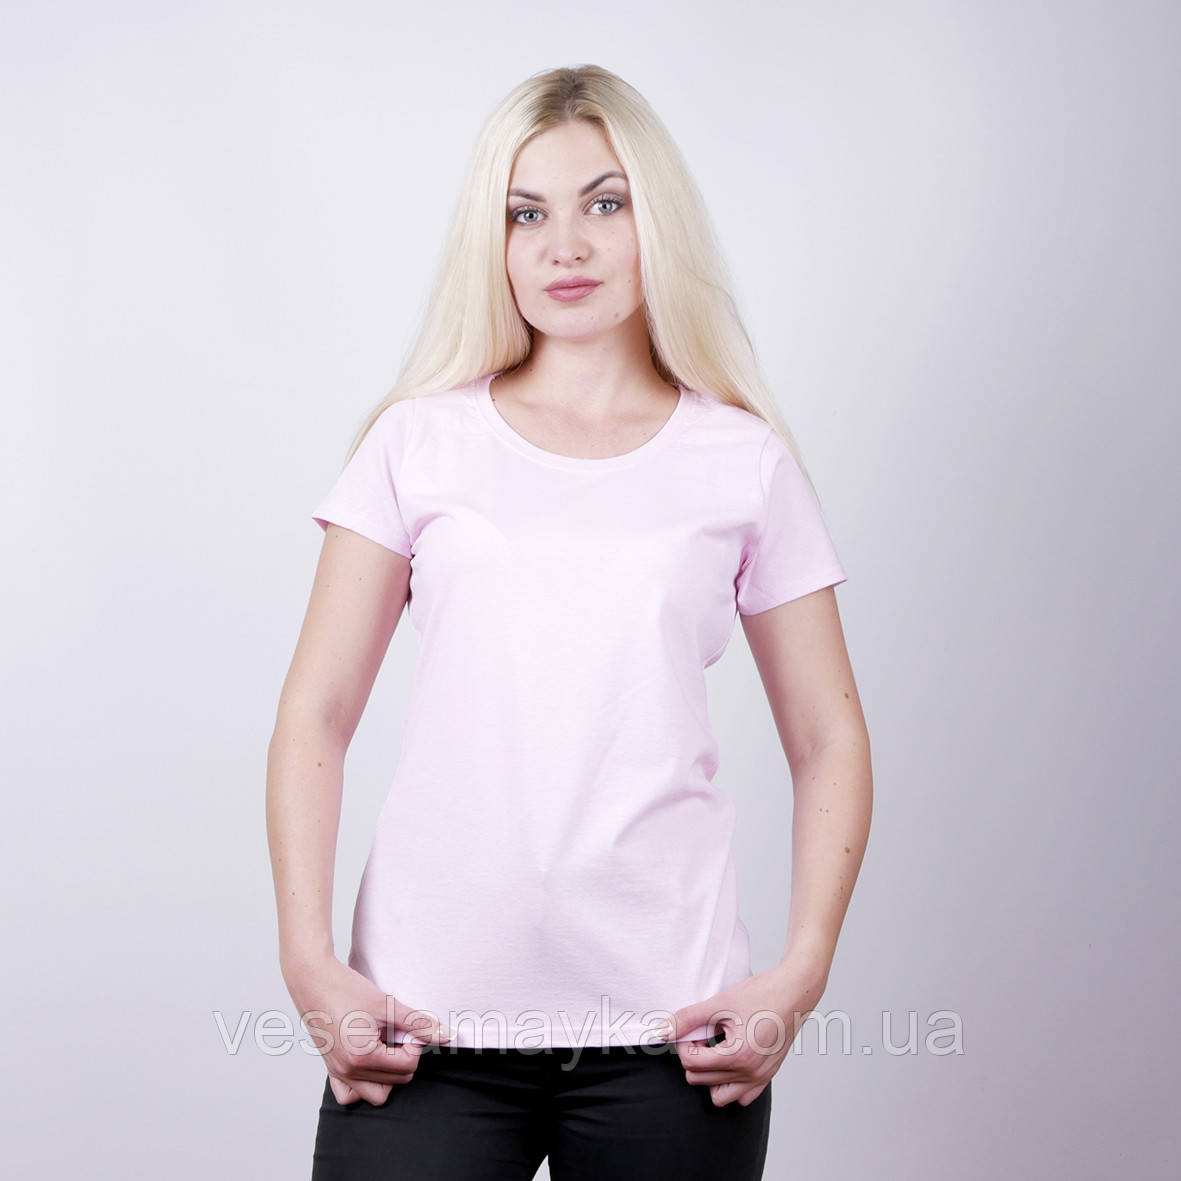 Рожева жіноча футболка (Комфорт)